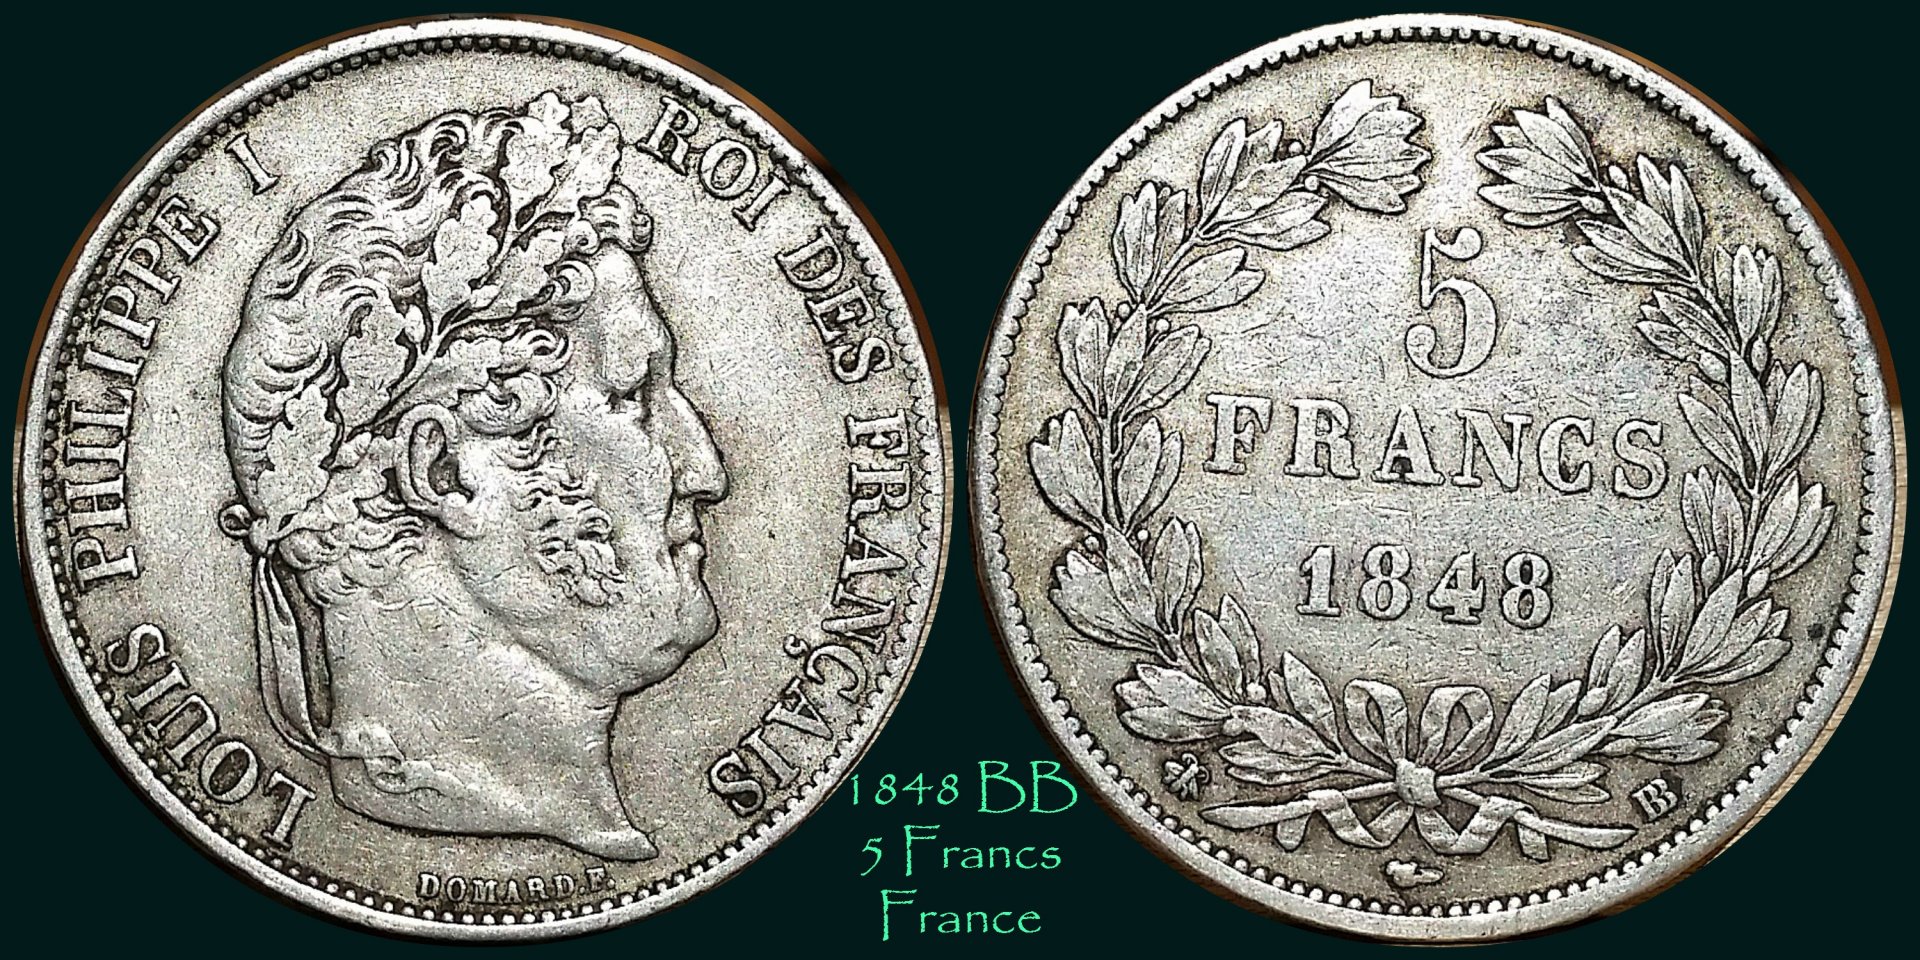 1848 bb 5 Francs.jpg